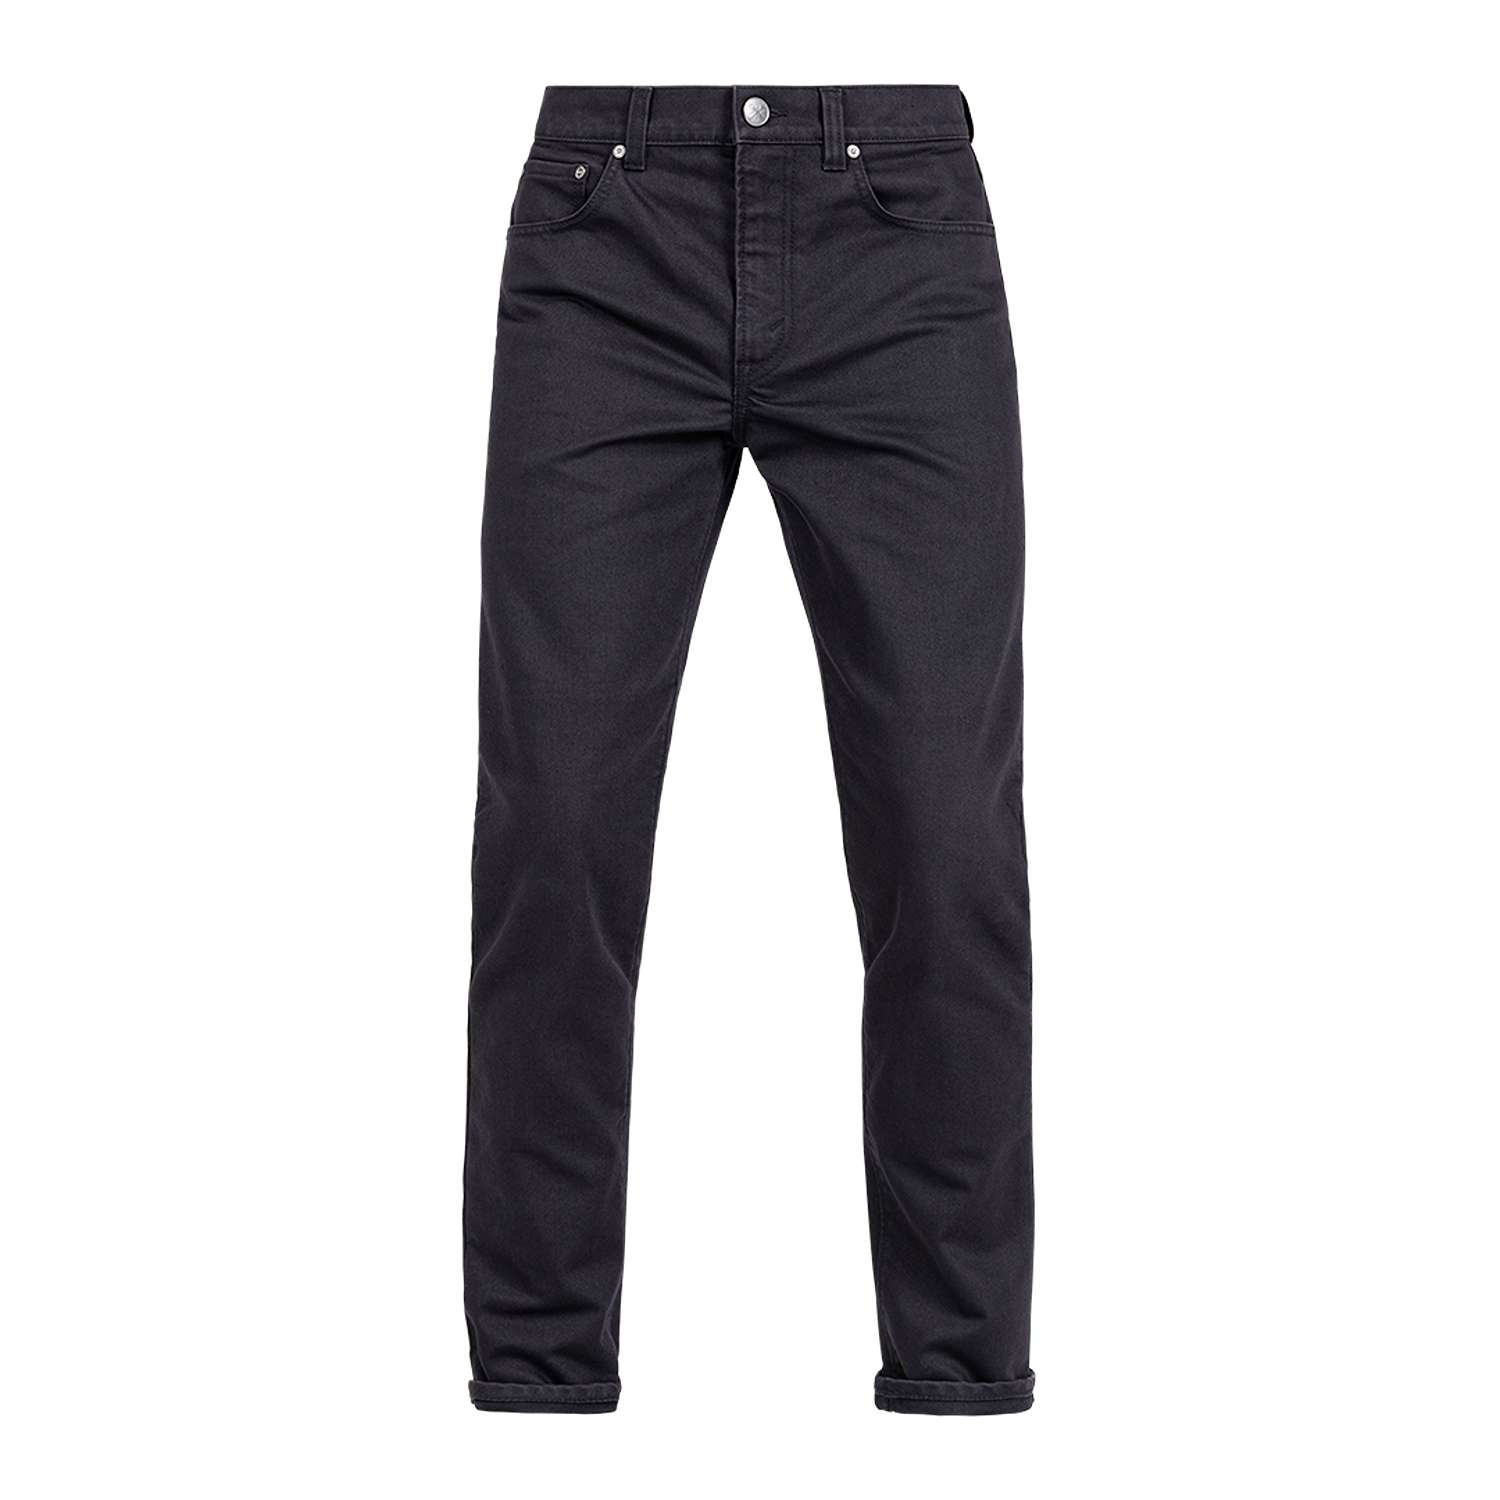 Image of John Doe Classic Tapered Jeans Black Size W36/L32 EN